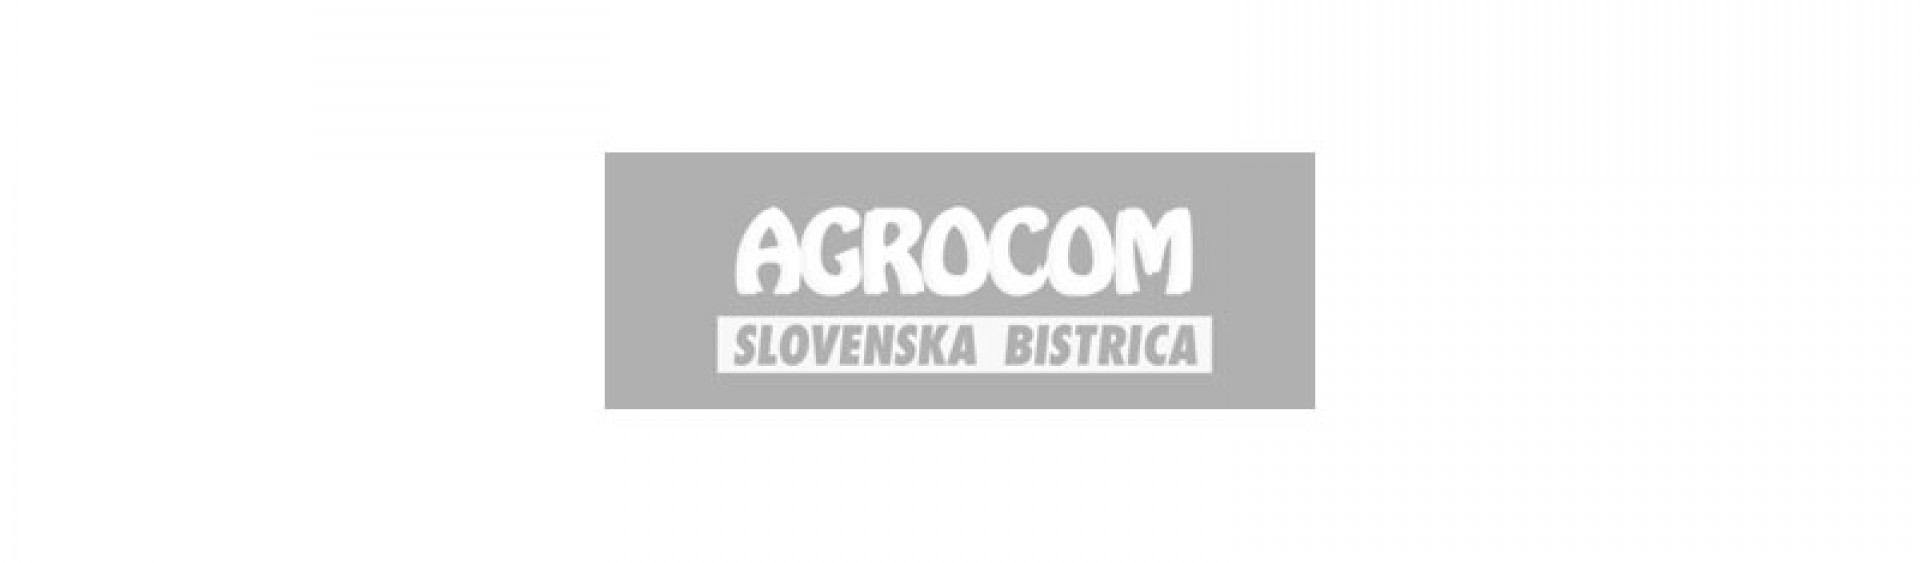 Agrocom trgovina Slovenska Bistrica